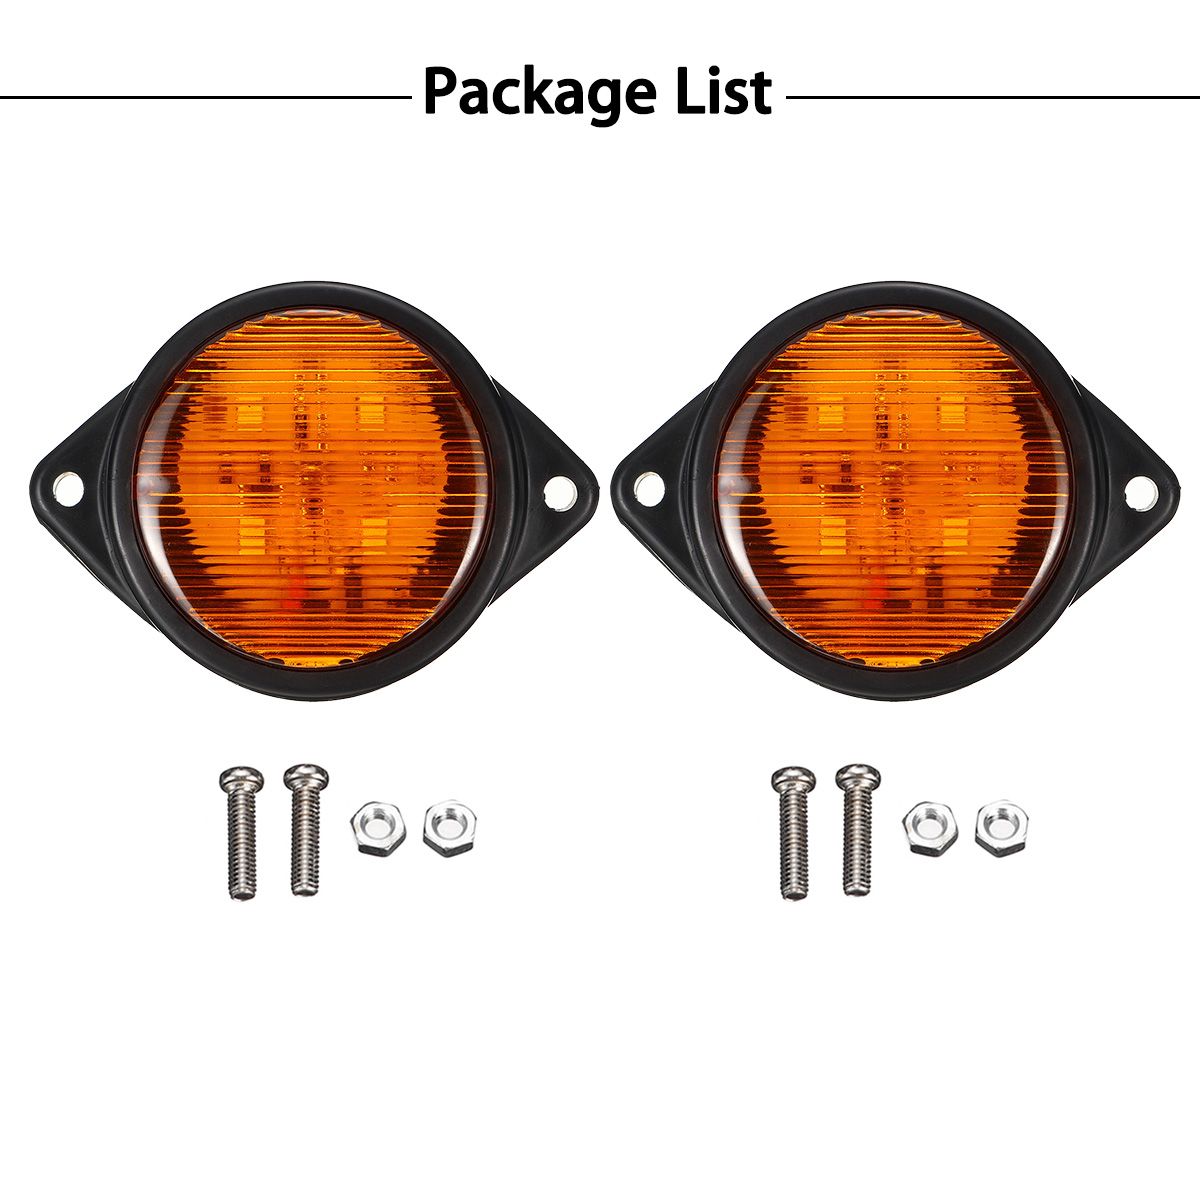 2PCS-24V-4LED-Trailer-Side-Marker-Lights-Truck-Caravan-Van-Stop-Indicator-Light-1742177